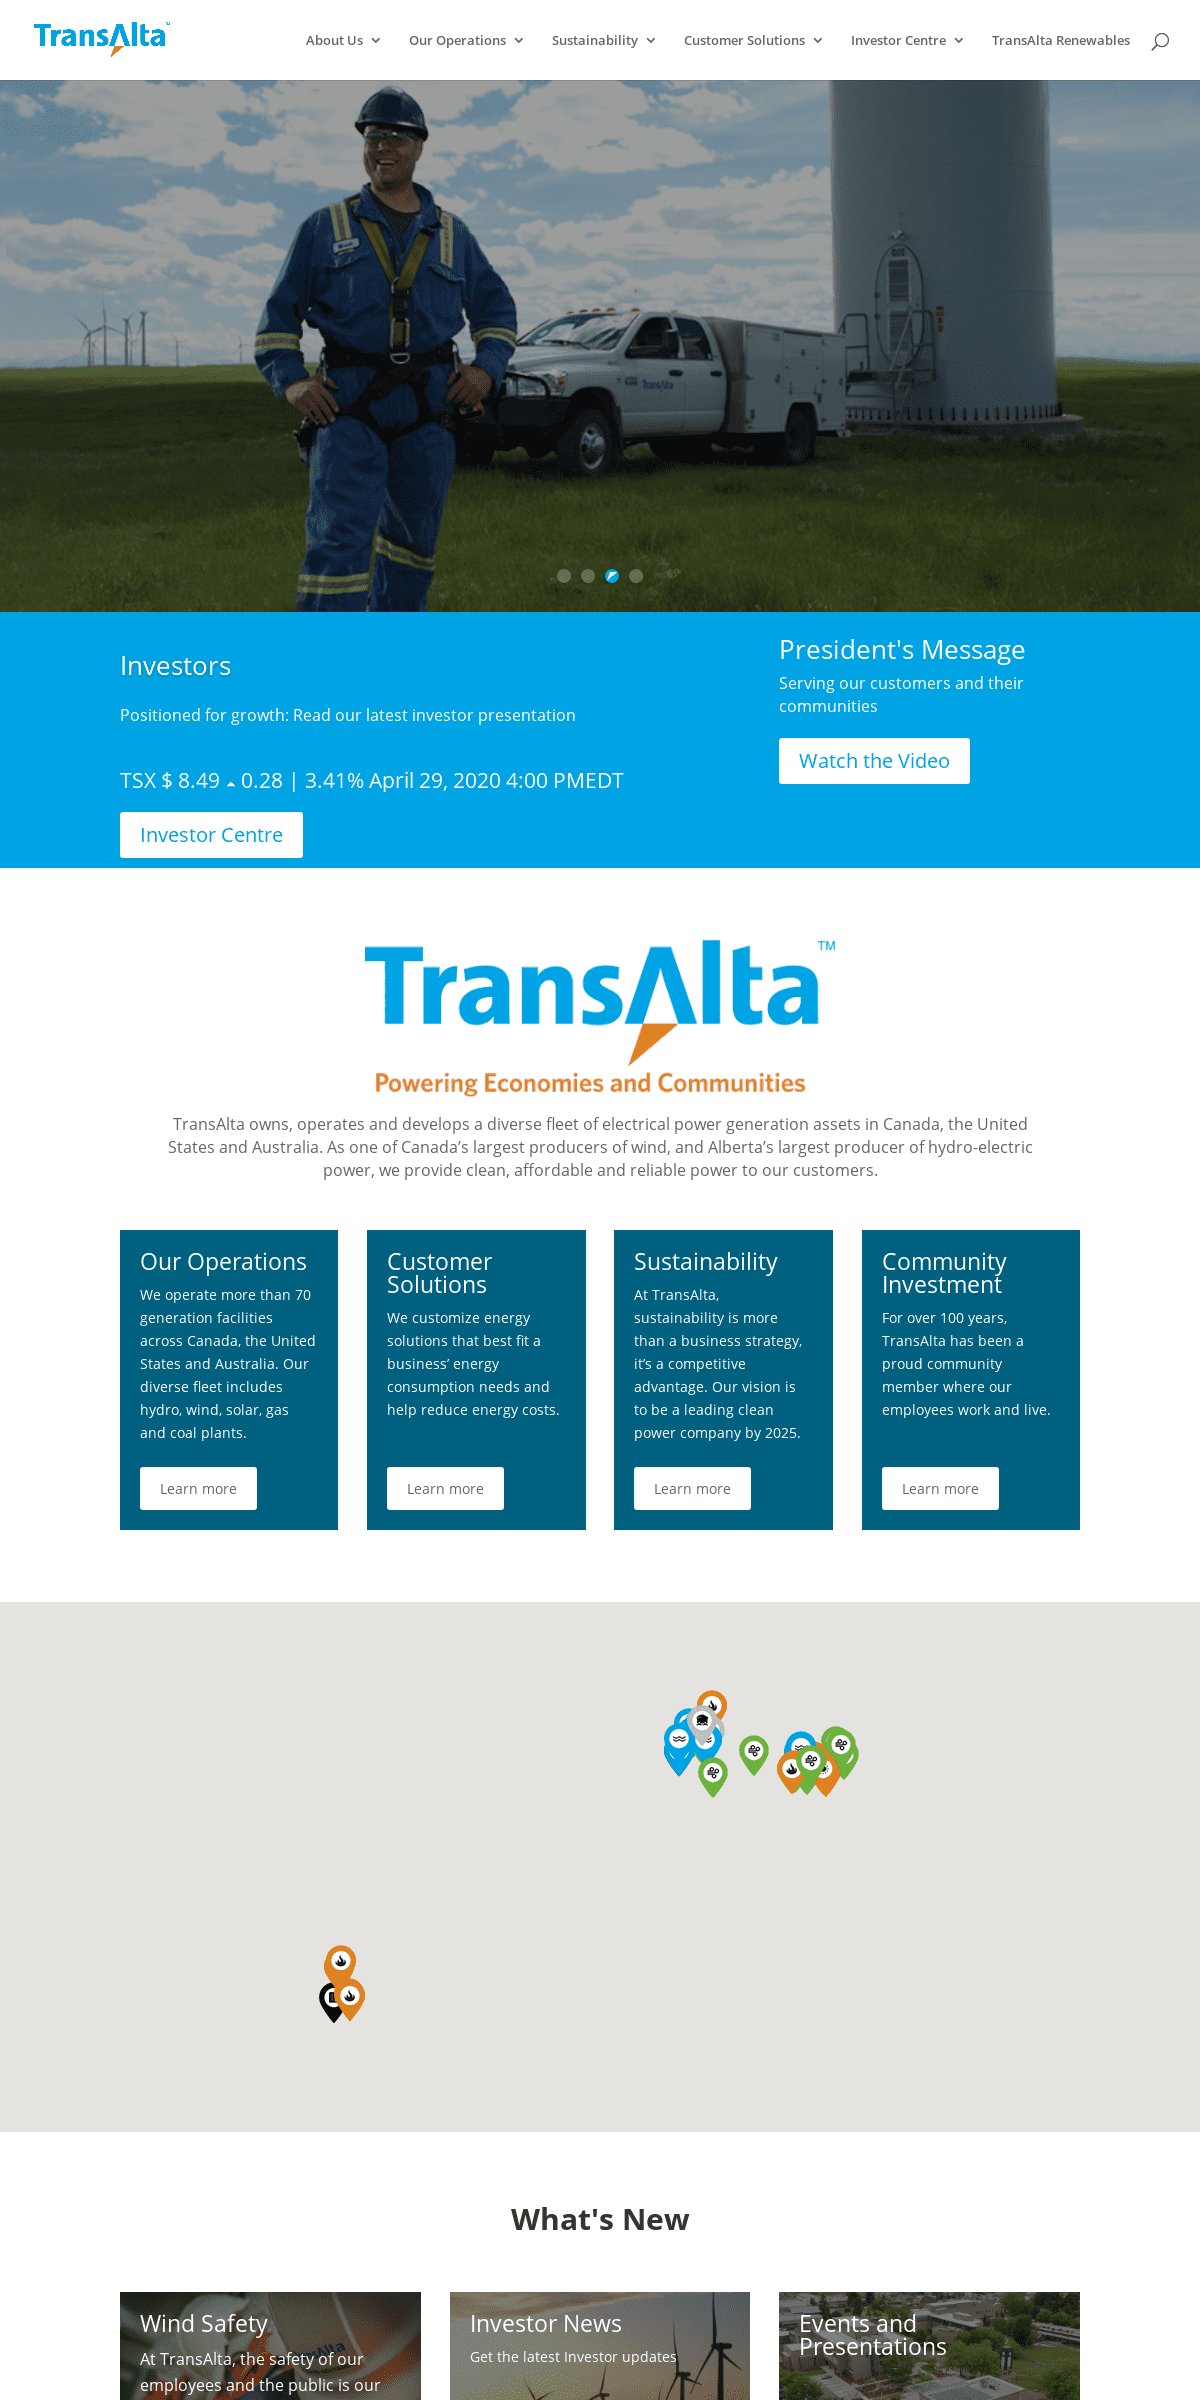 A complete backup of transalta.com